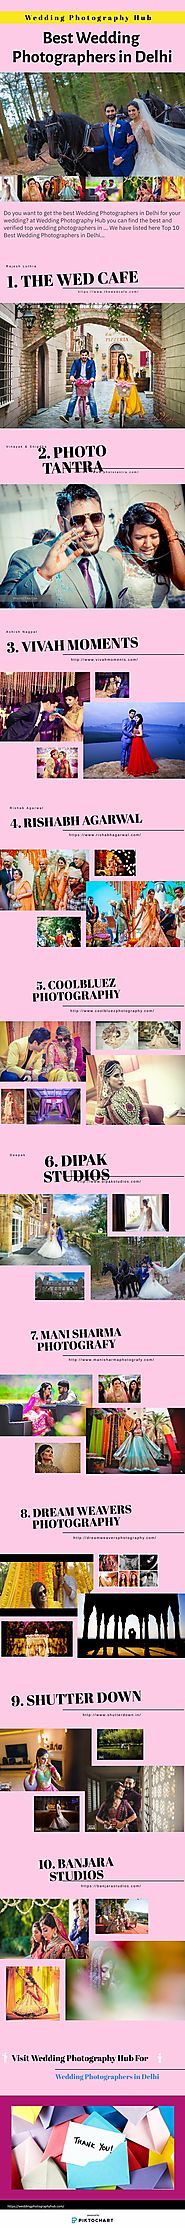 Best Wedding Photographers in Delhi | Infographic